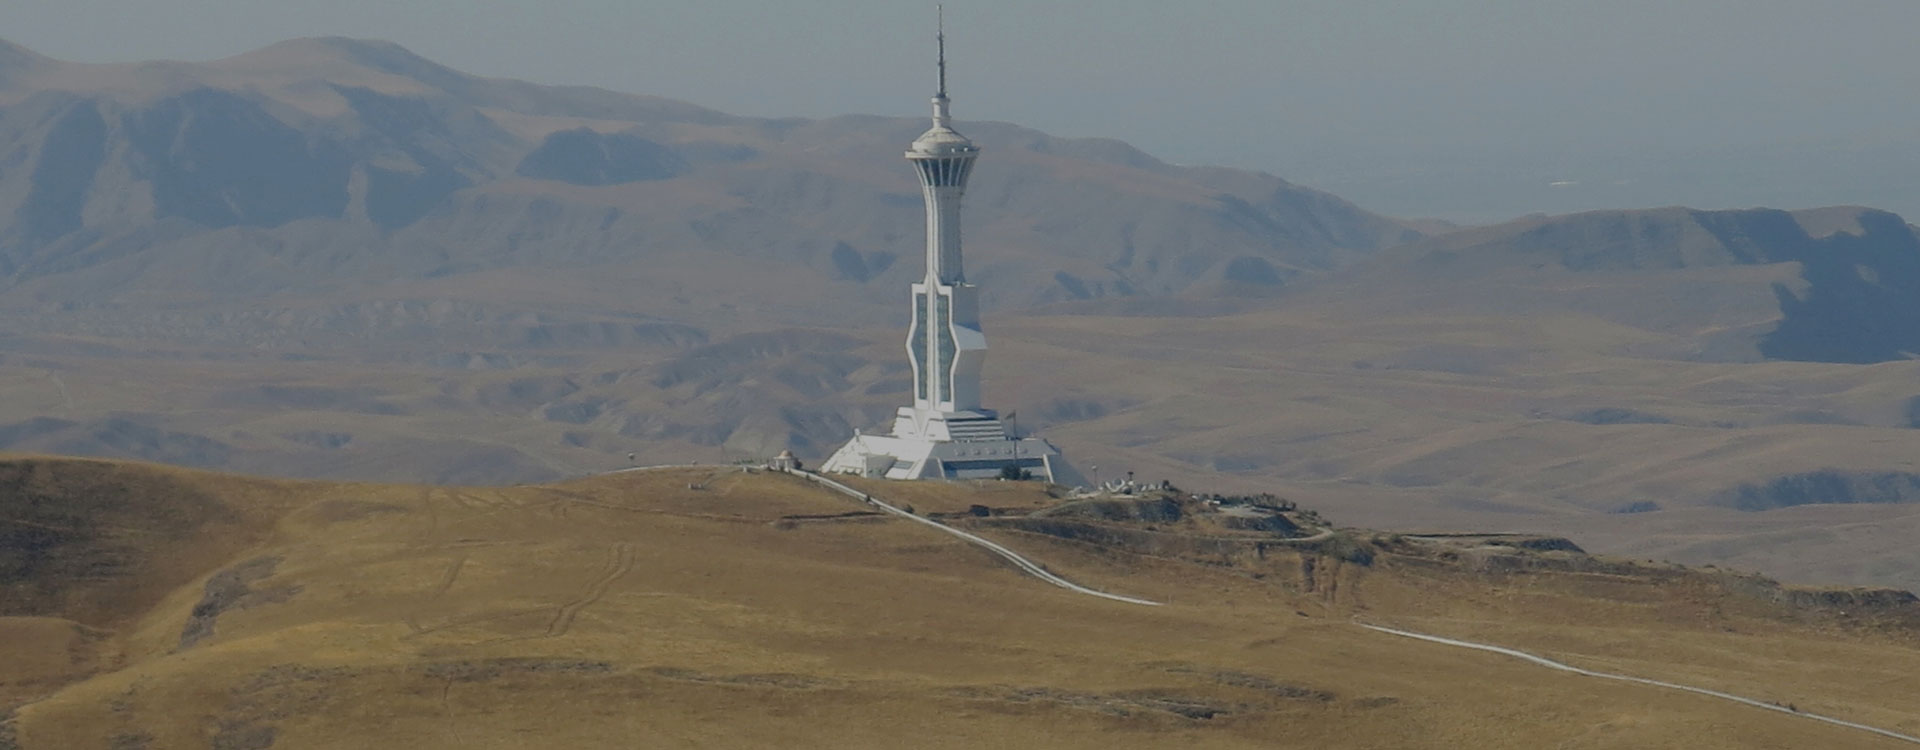 Getting To Turkmenistan